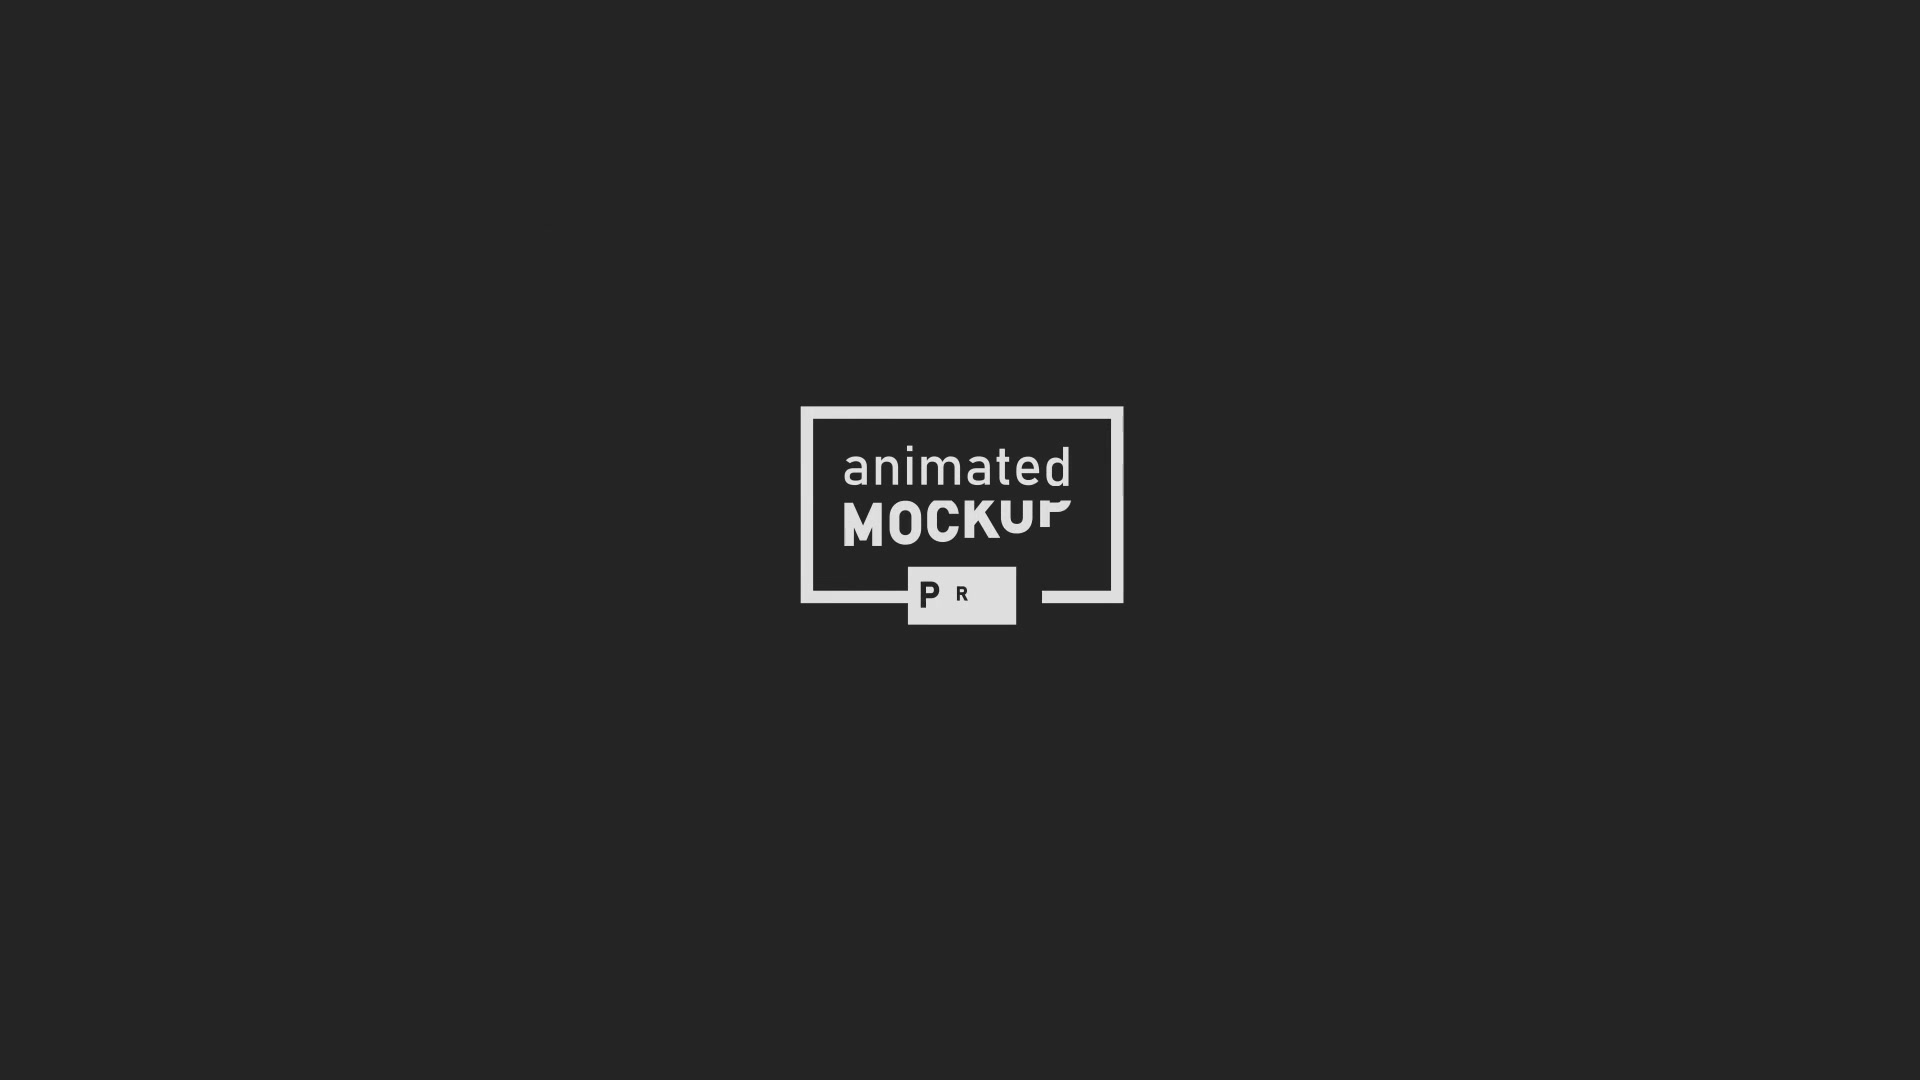 Download Animated Mockup PRO: 360 Animated T shirt Mockup Template ...